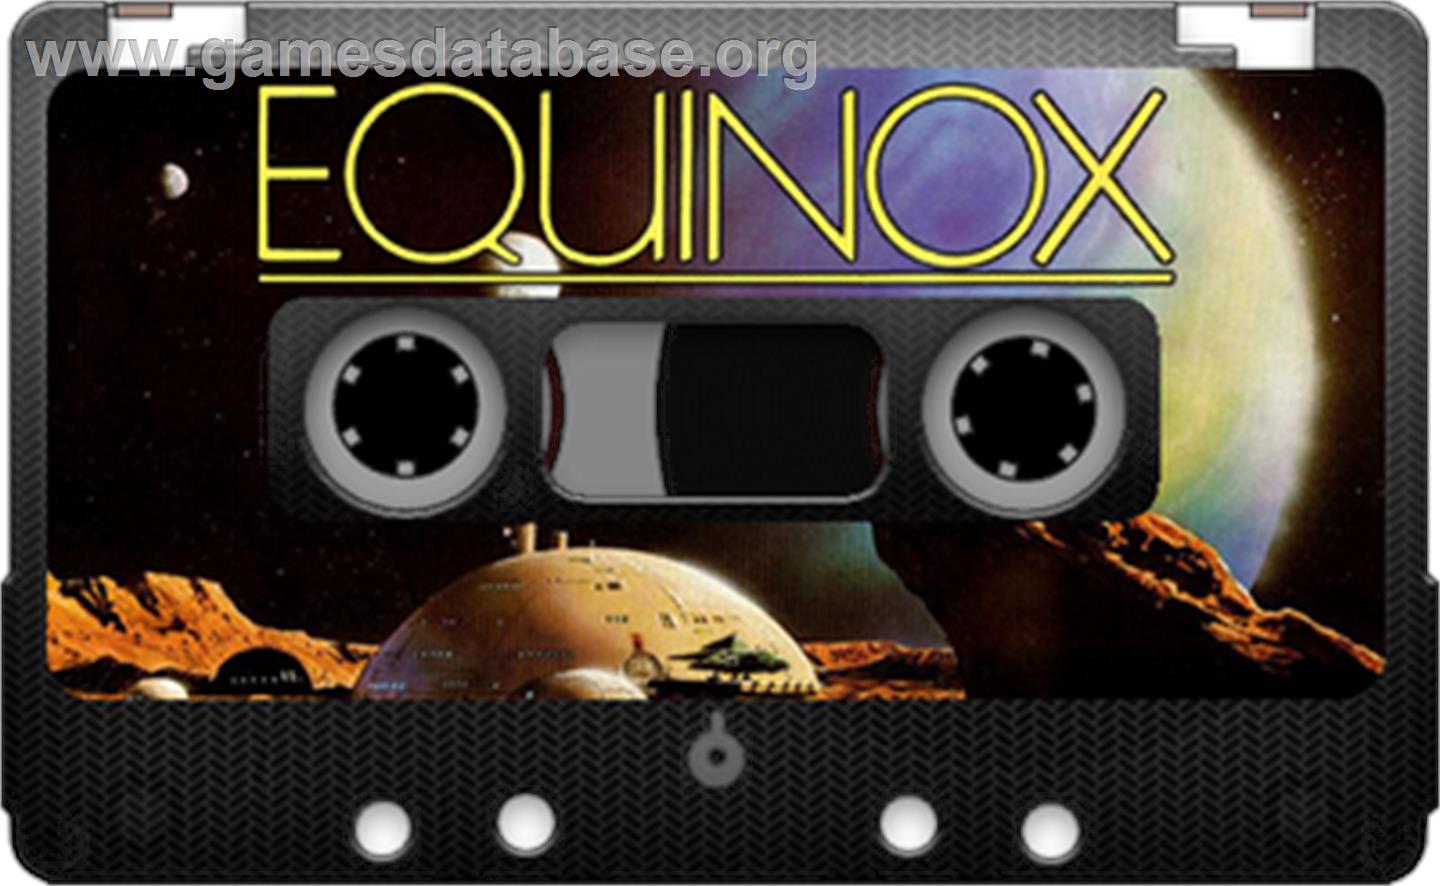 Equinox - Sinclair ZX Spectrum - Artwork - Cartridge